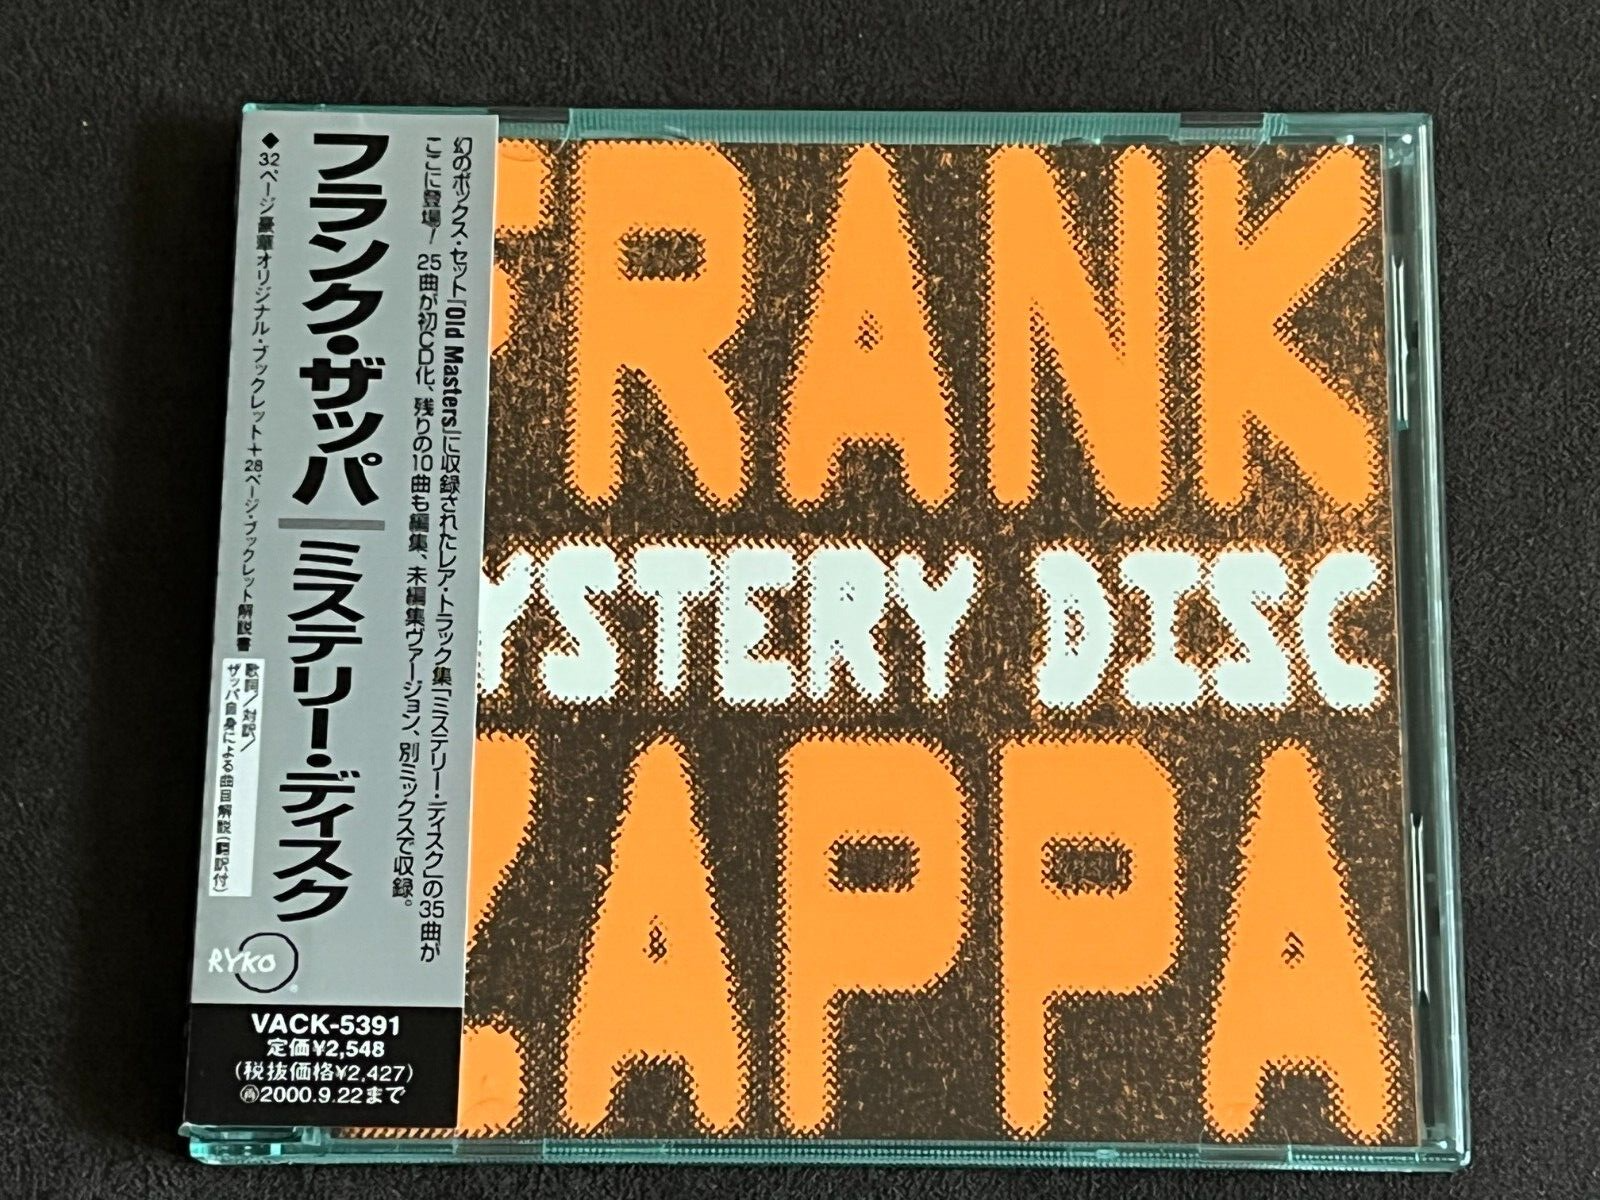 FRANK ZAPPA-Mystery Disc-1998 CD Japan | eBay